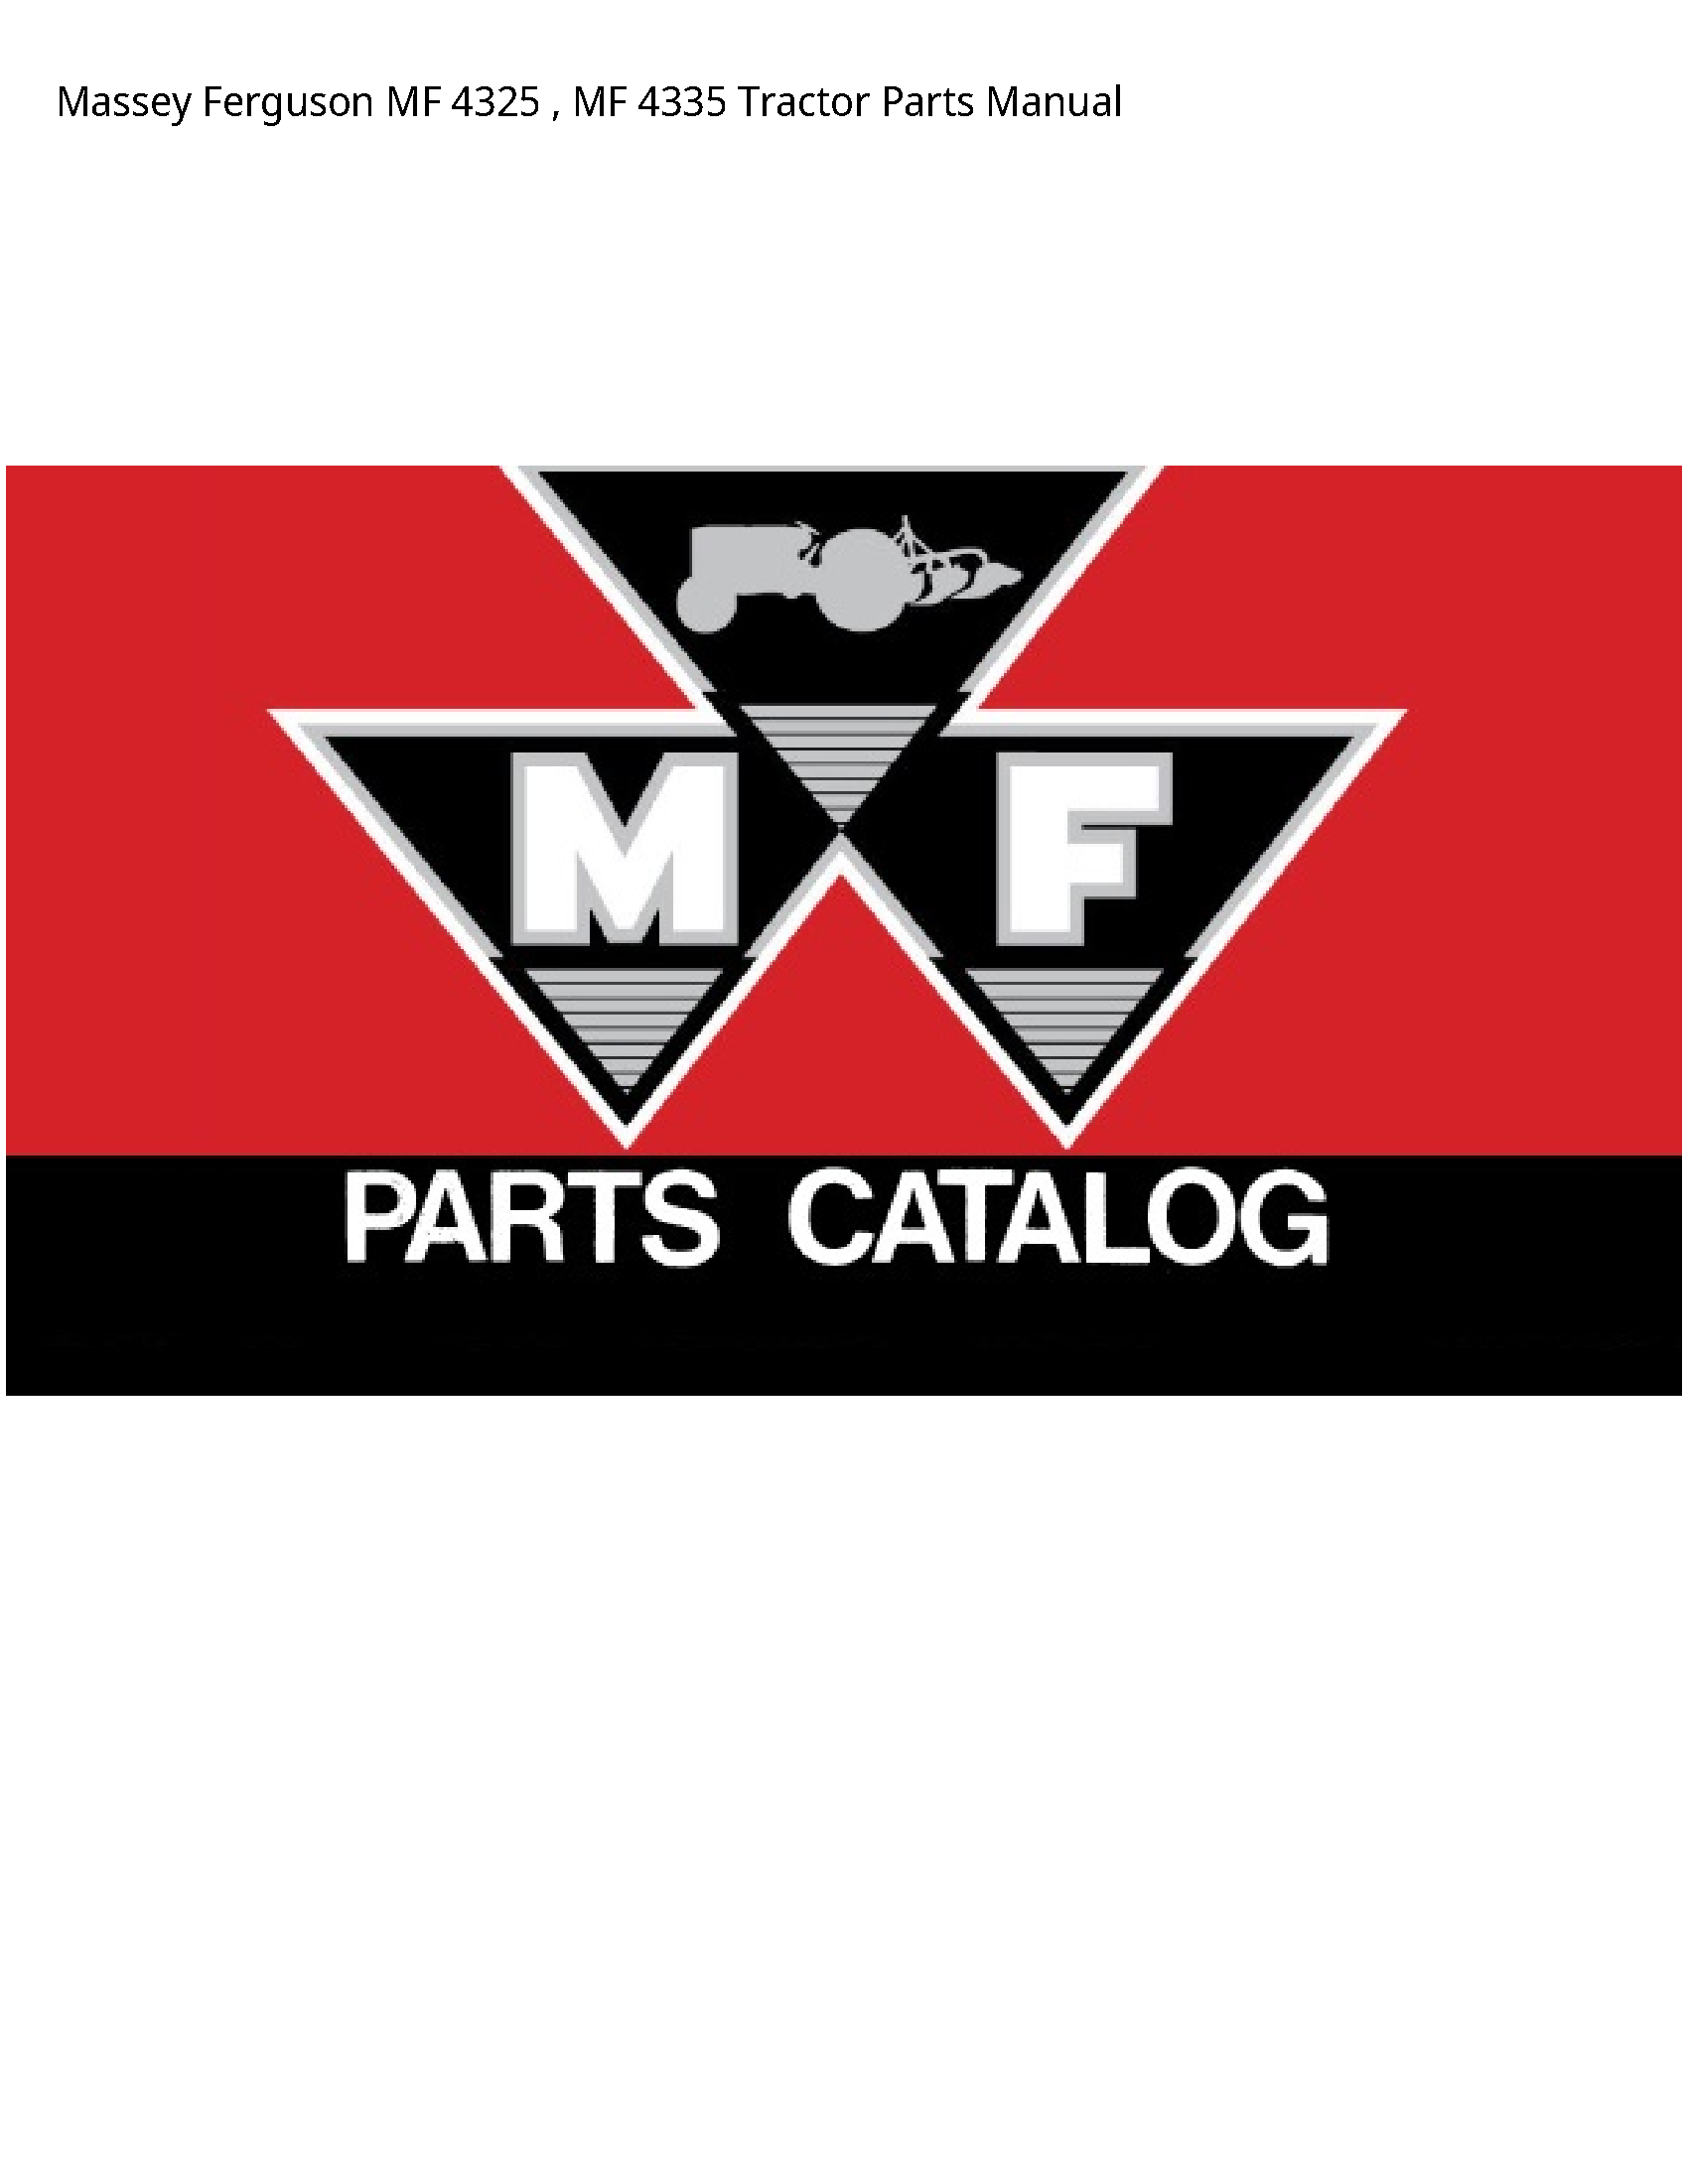 Massey Ferguson 4325 MF MF Tractor Parts manual